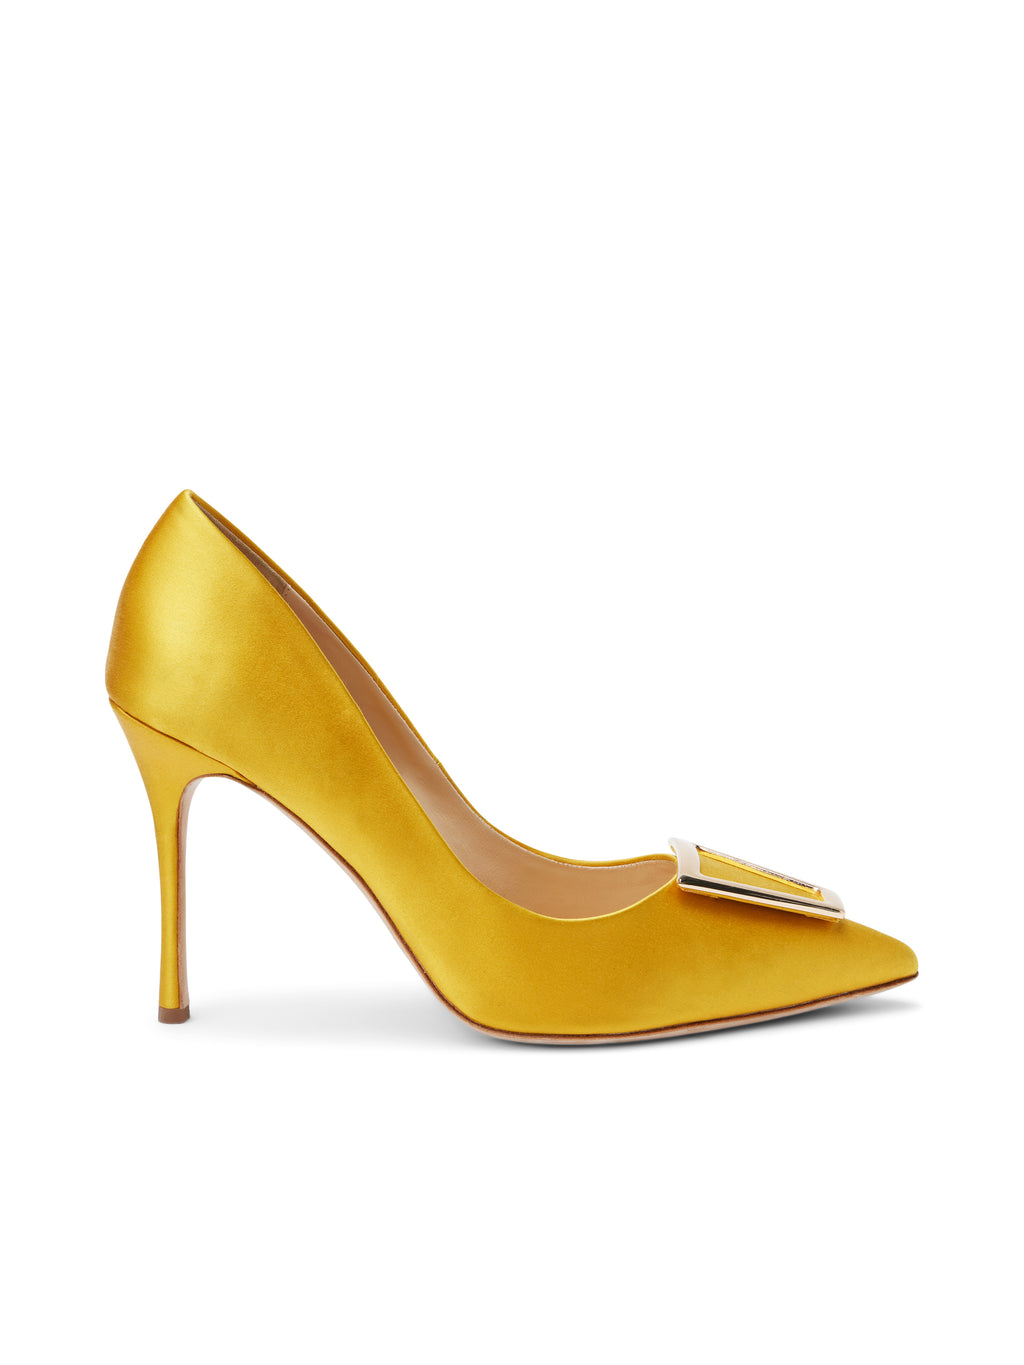 Designer Heels for Women | L’AGENCE – L'AGENCE